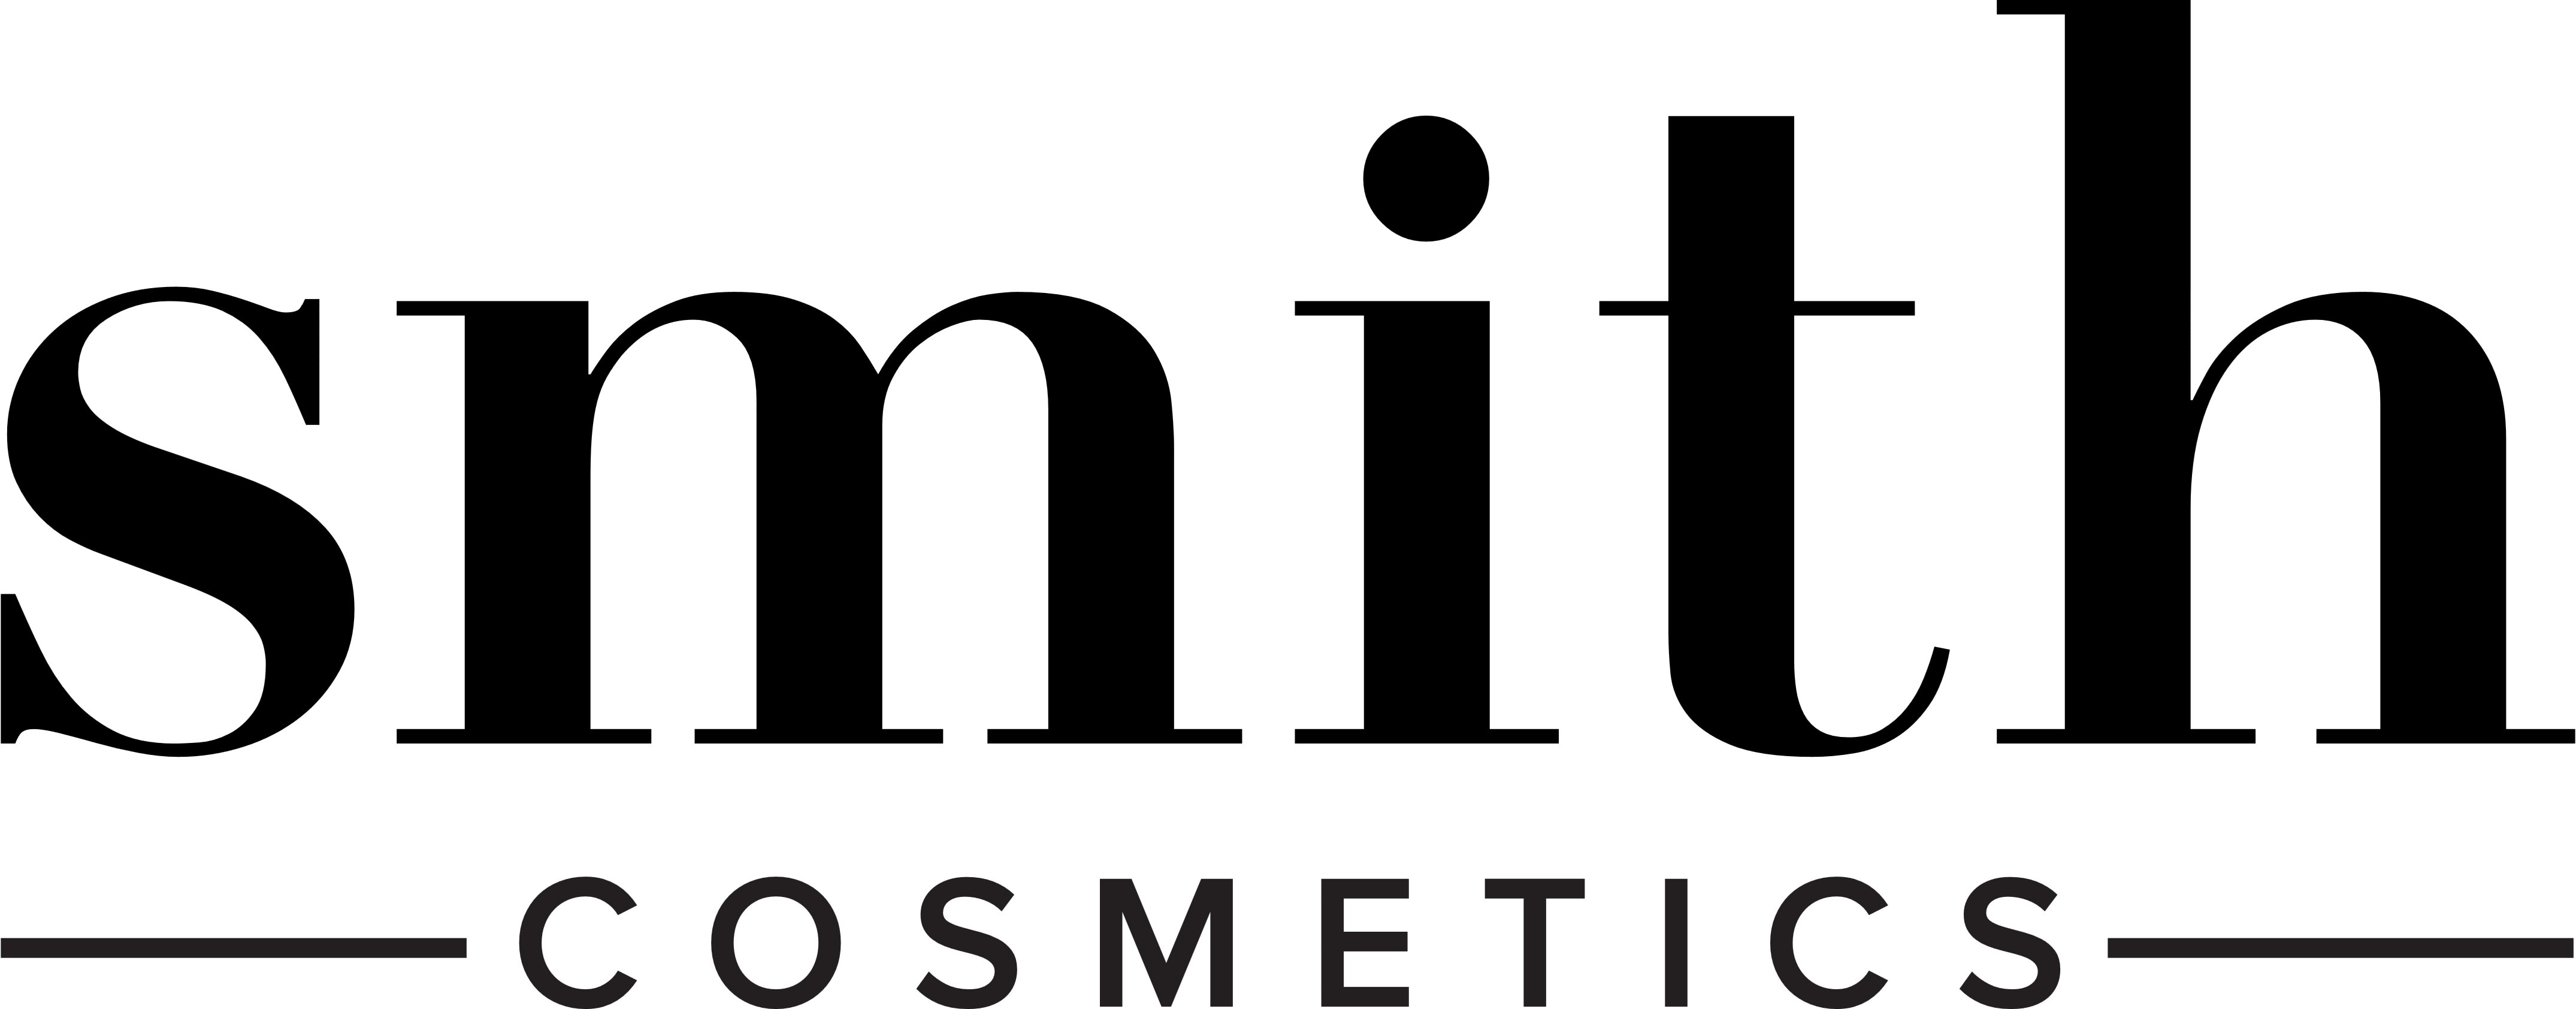 Cosmetic Brand Logos